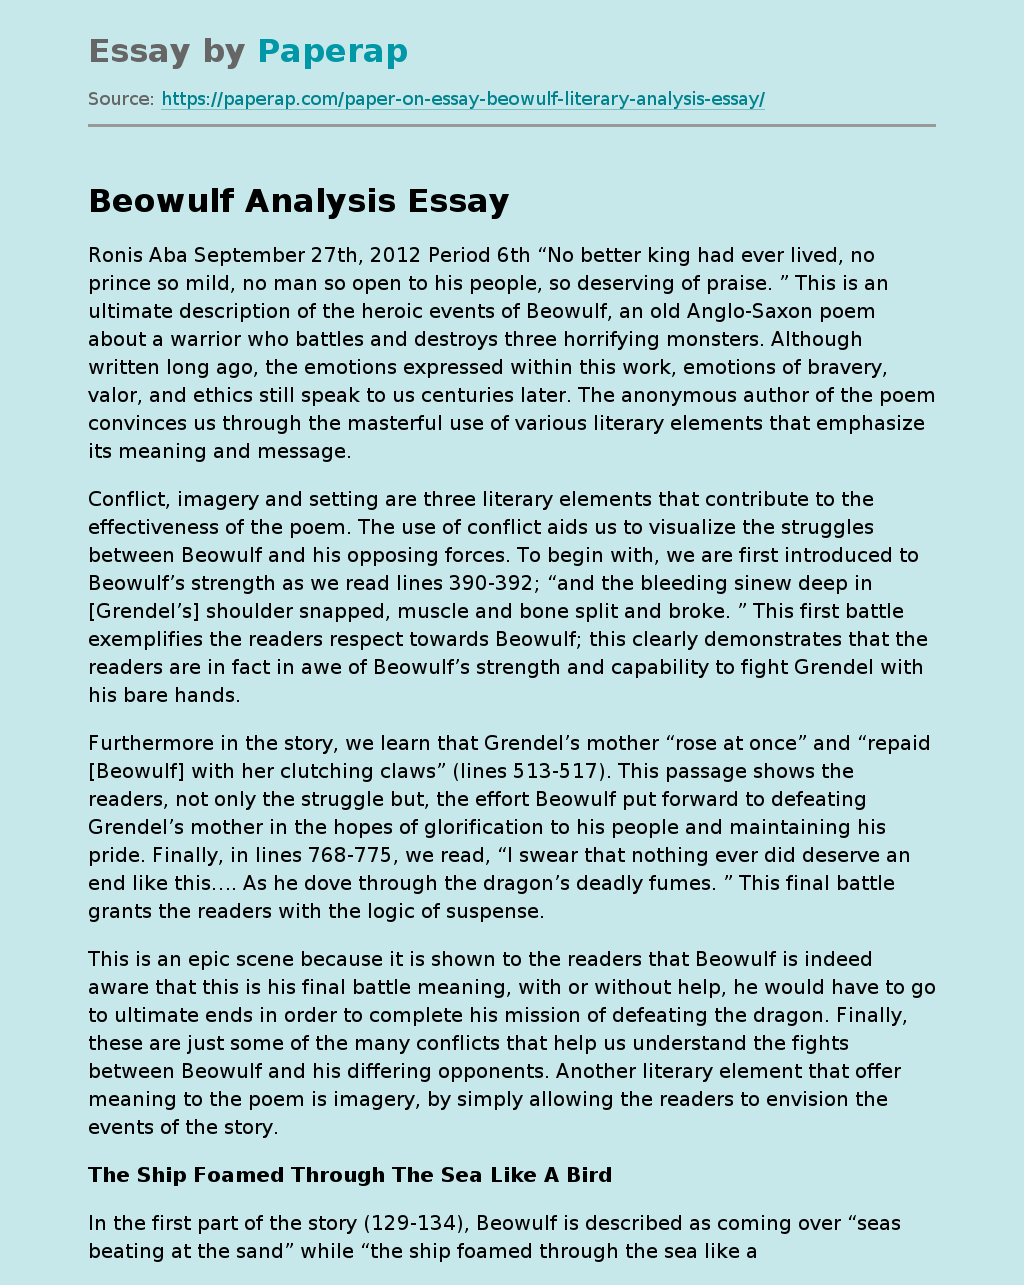 Beowulf Analysis